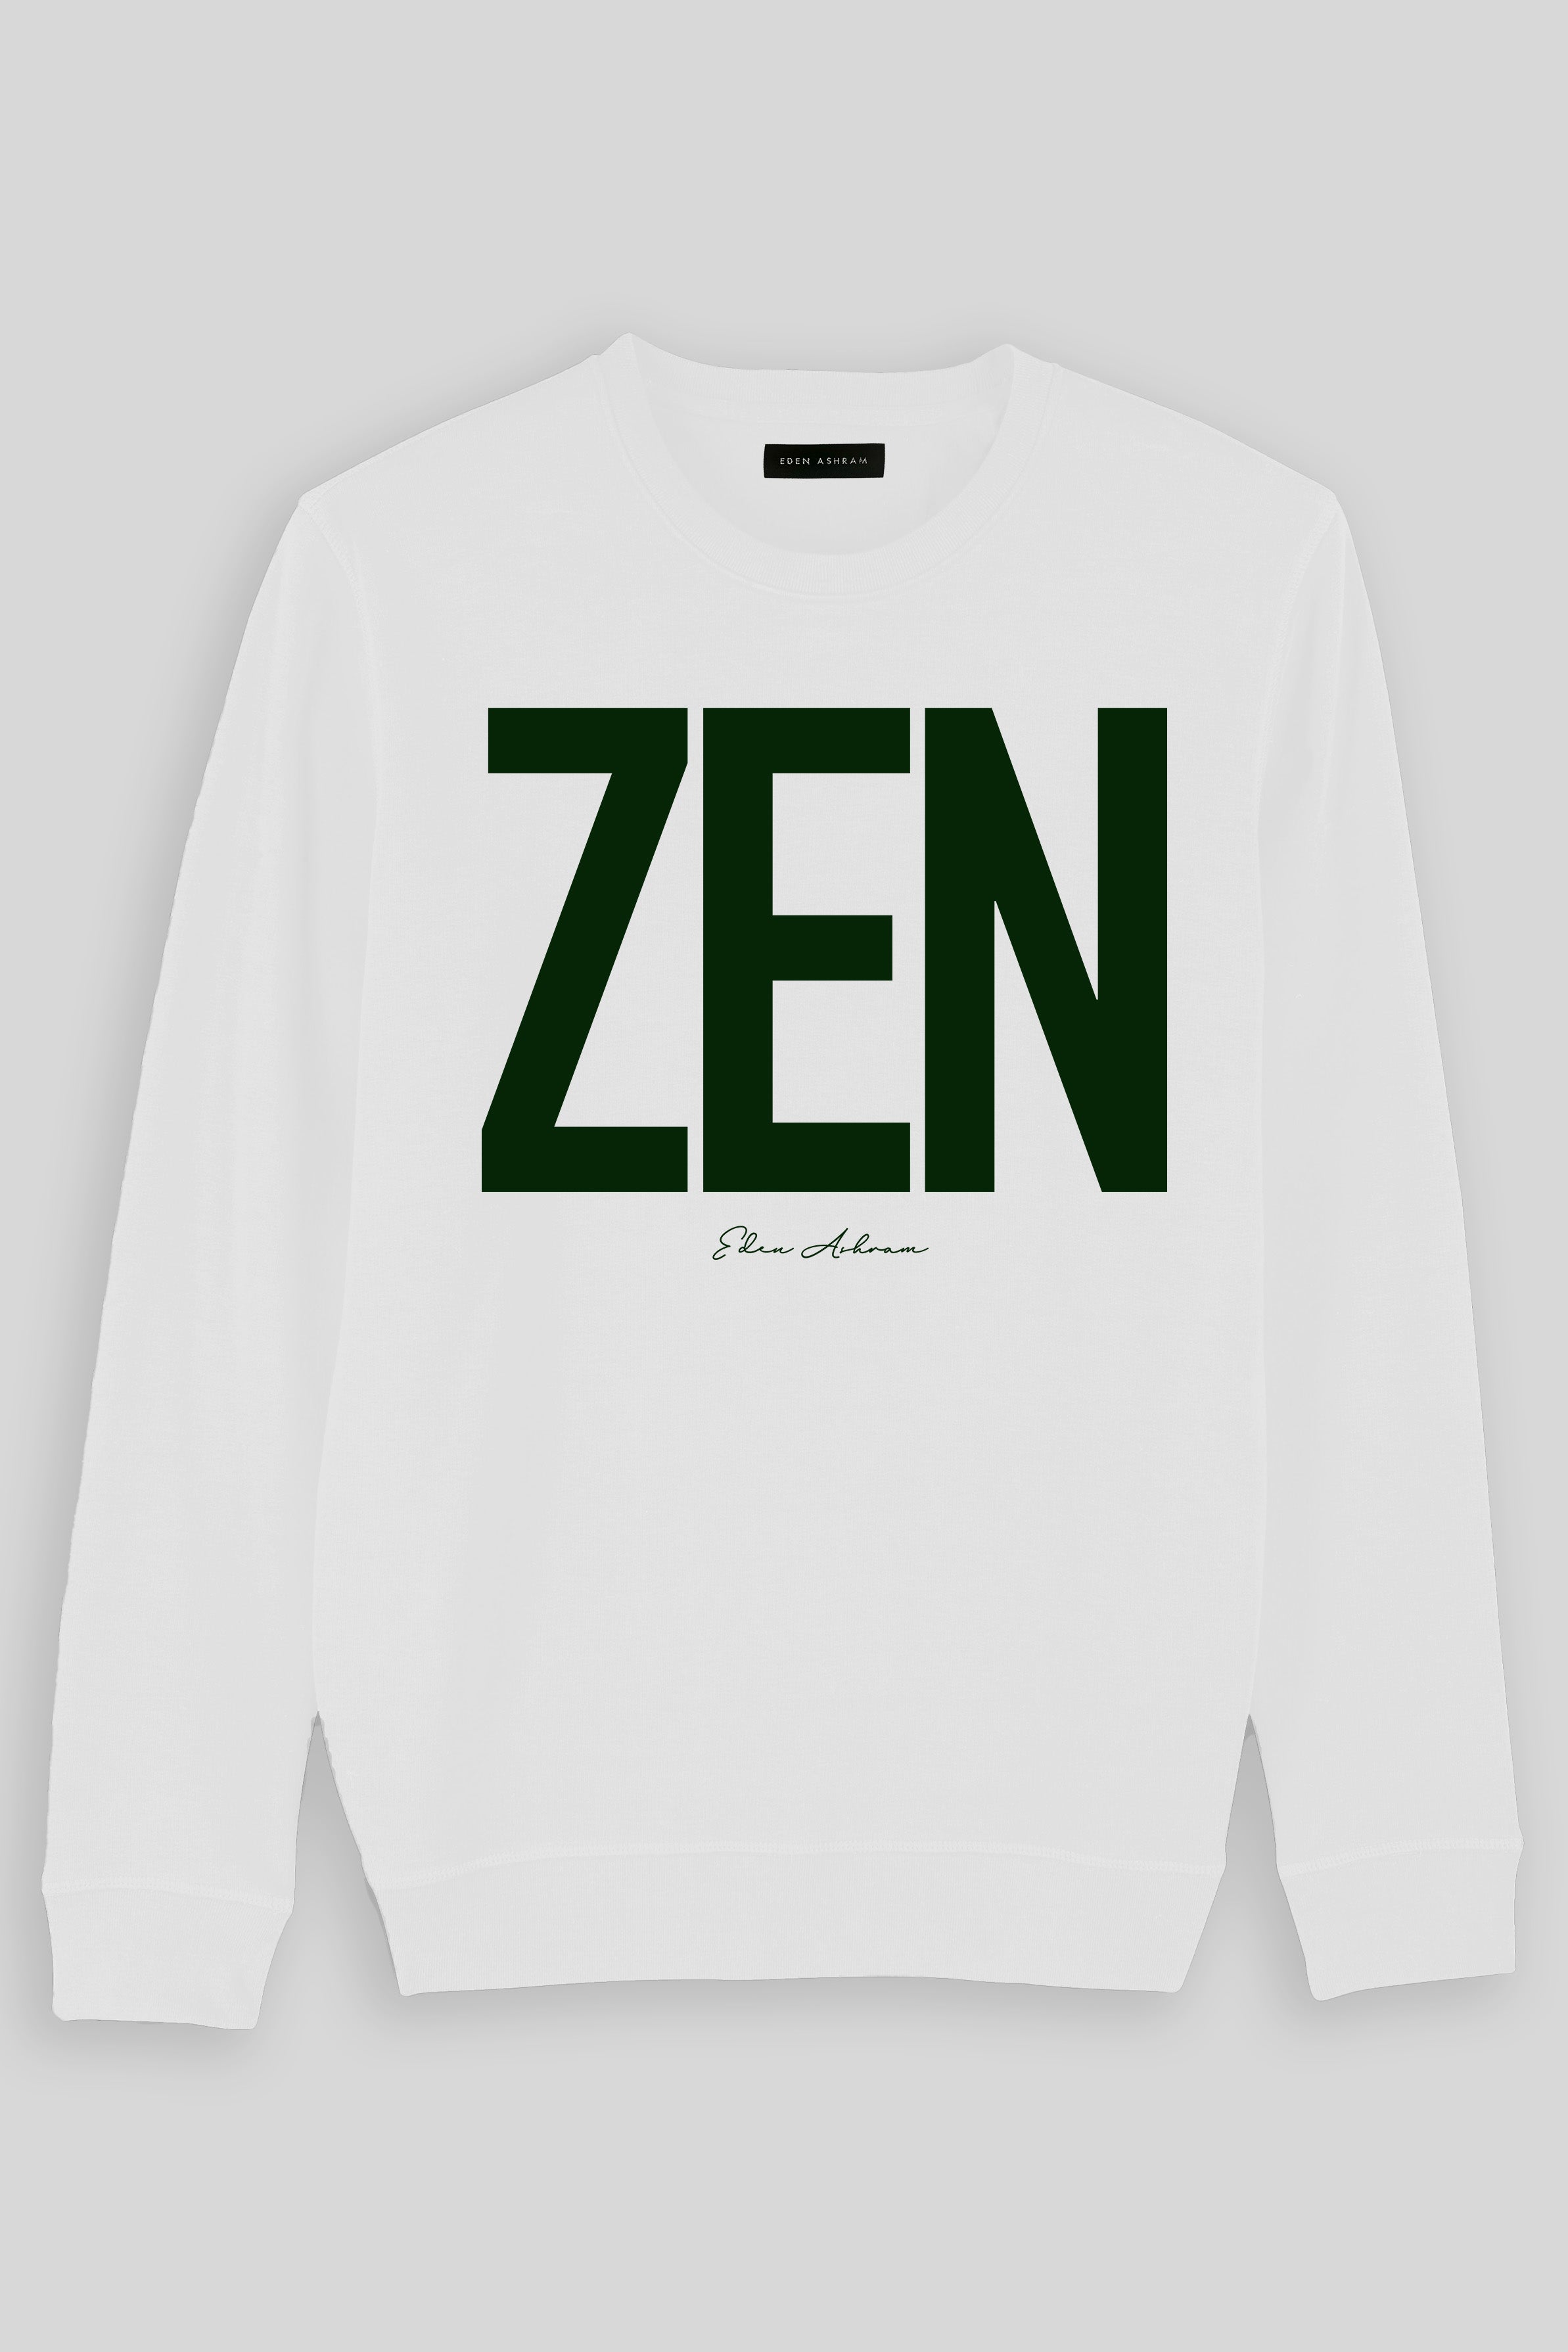 Eden Ashram ZEN Premium Crew Neck Sweatshirt White